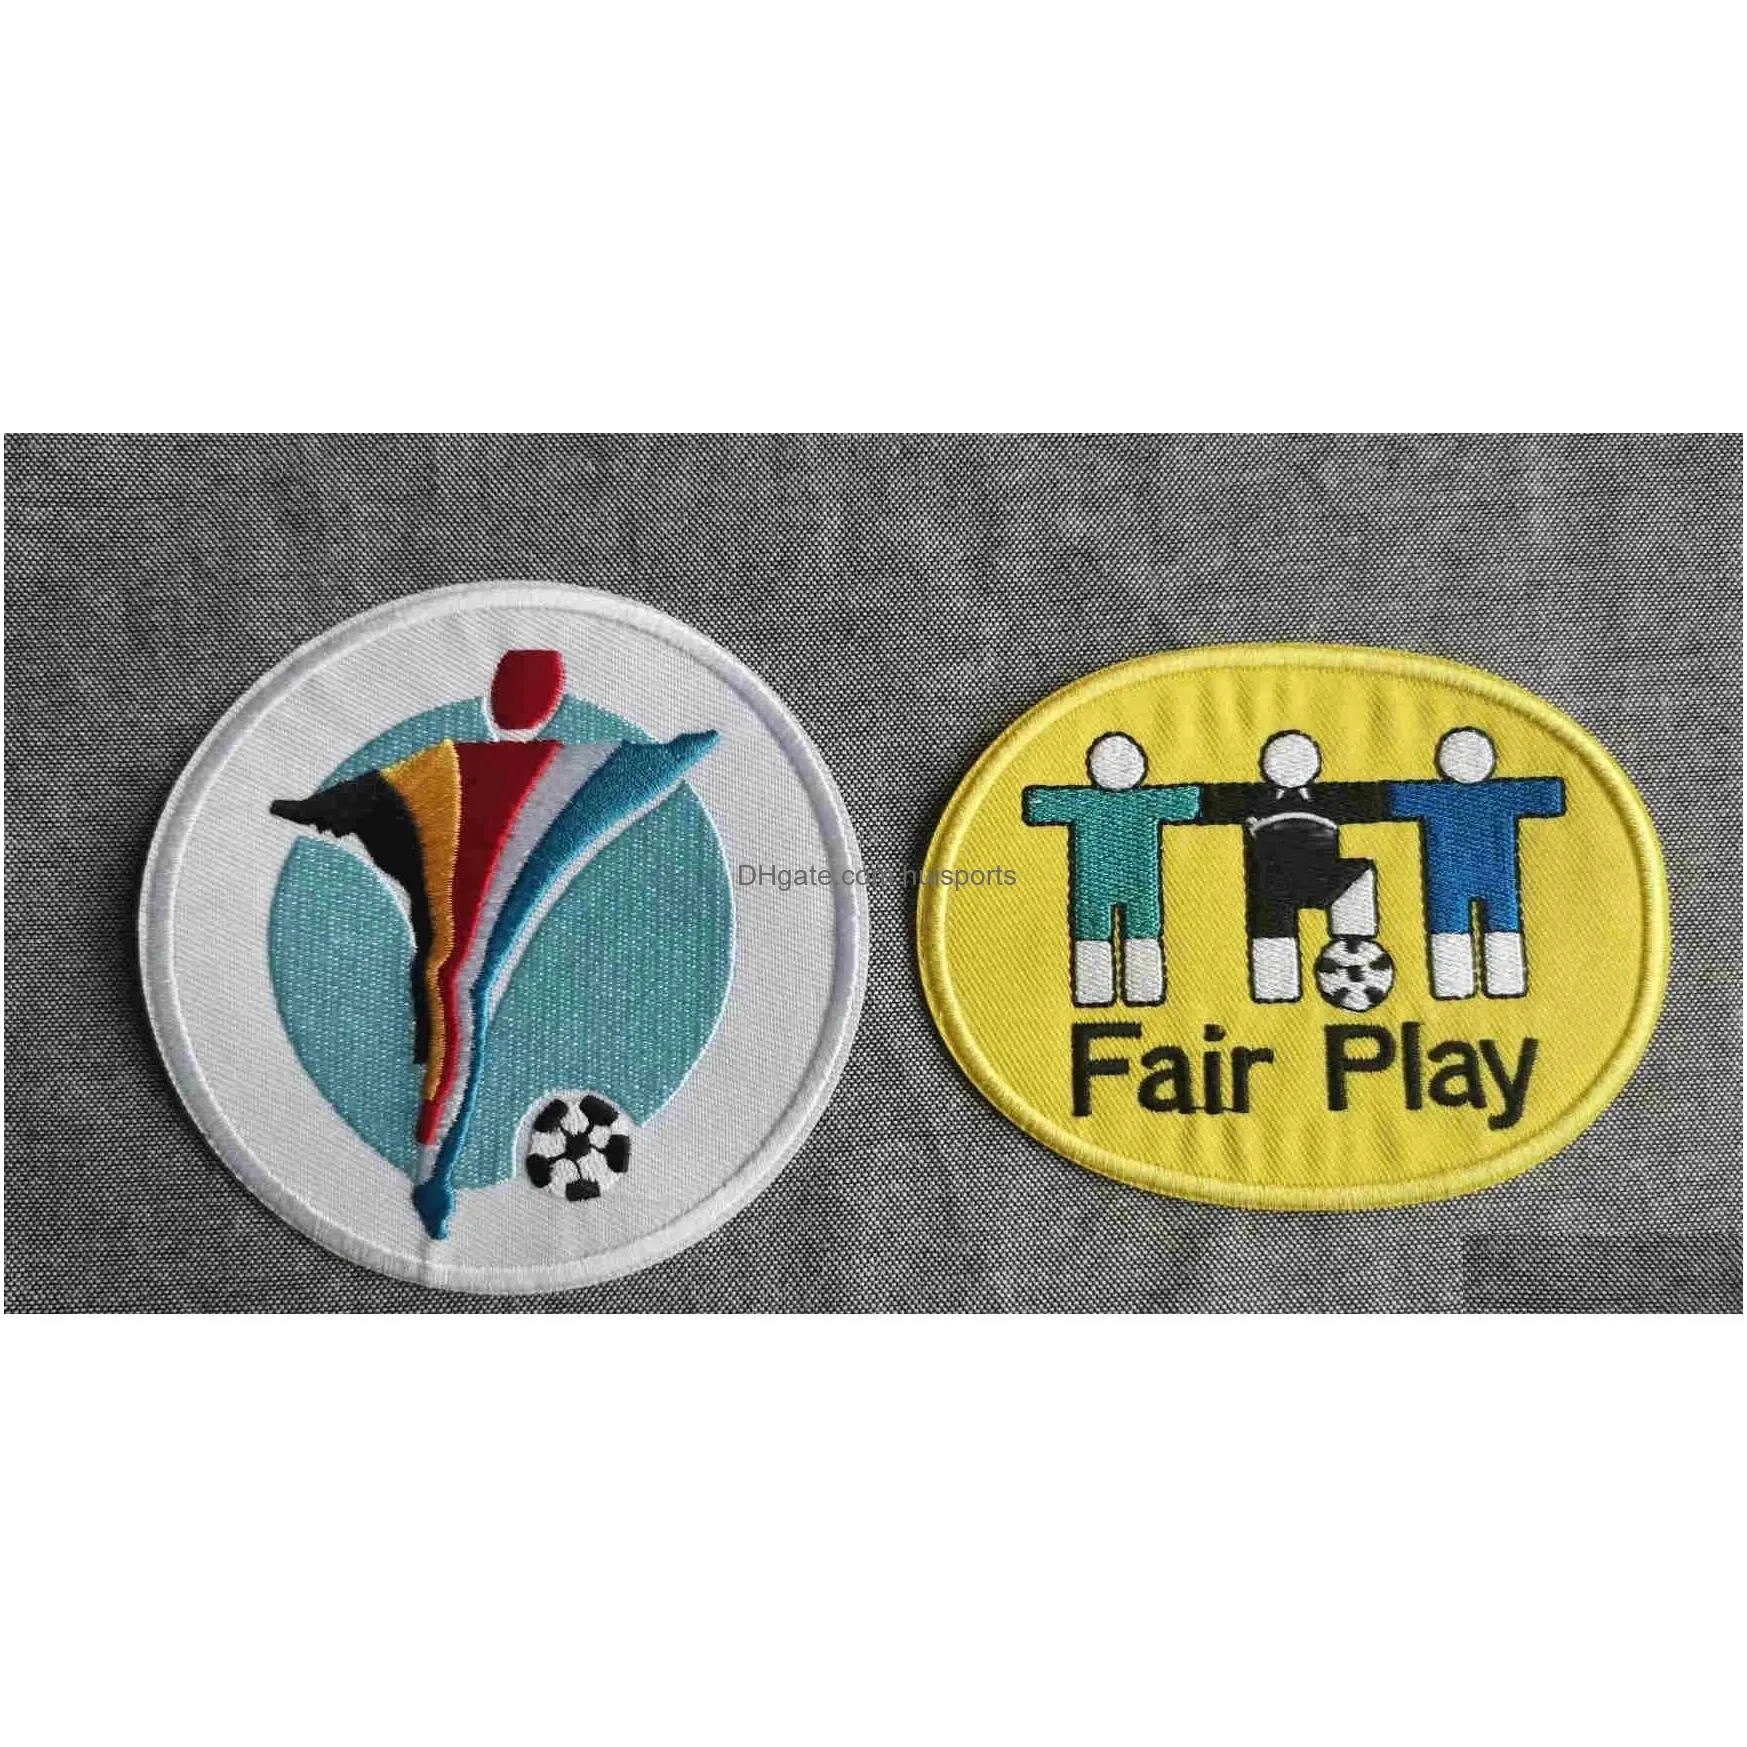 souvenirs retro european 1996 200 2004 euro football printes badges soccer stamping badges